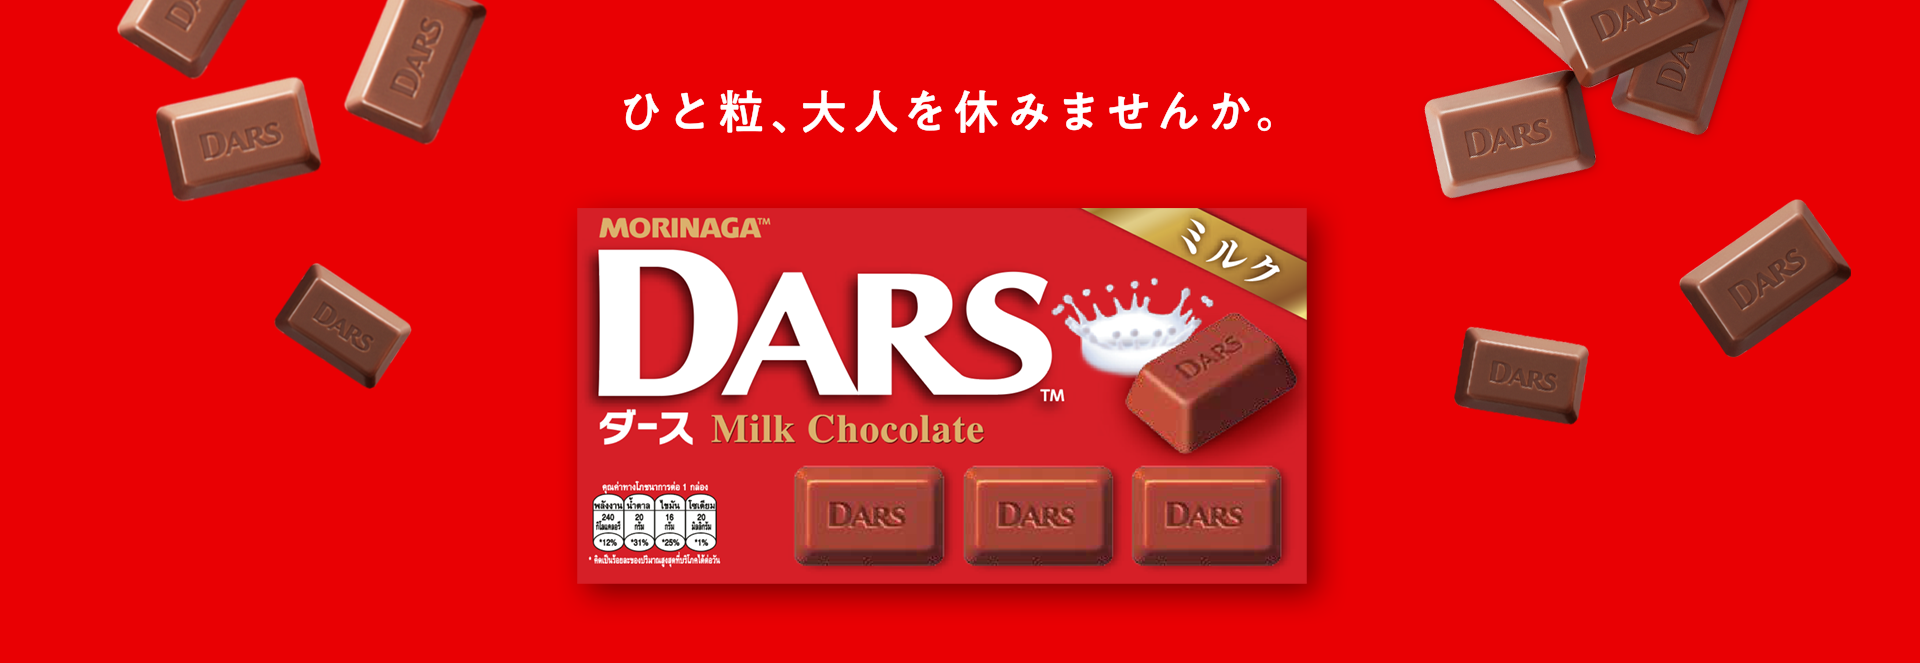 DARS banner